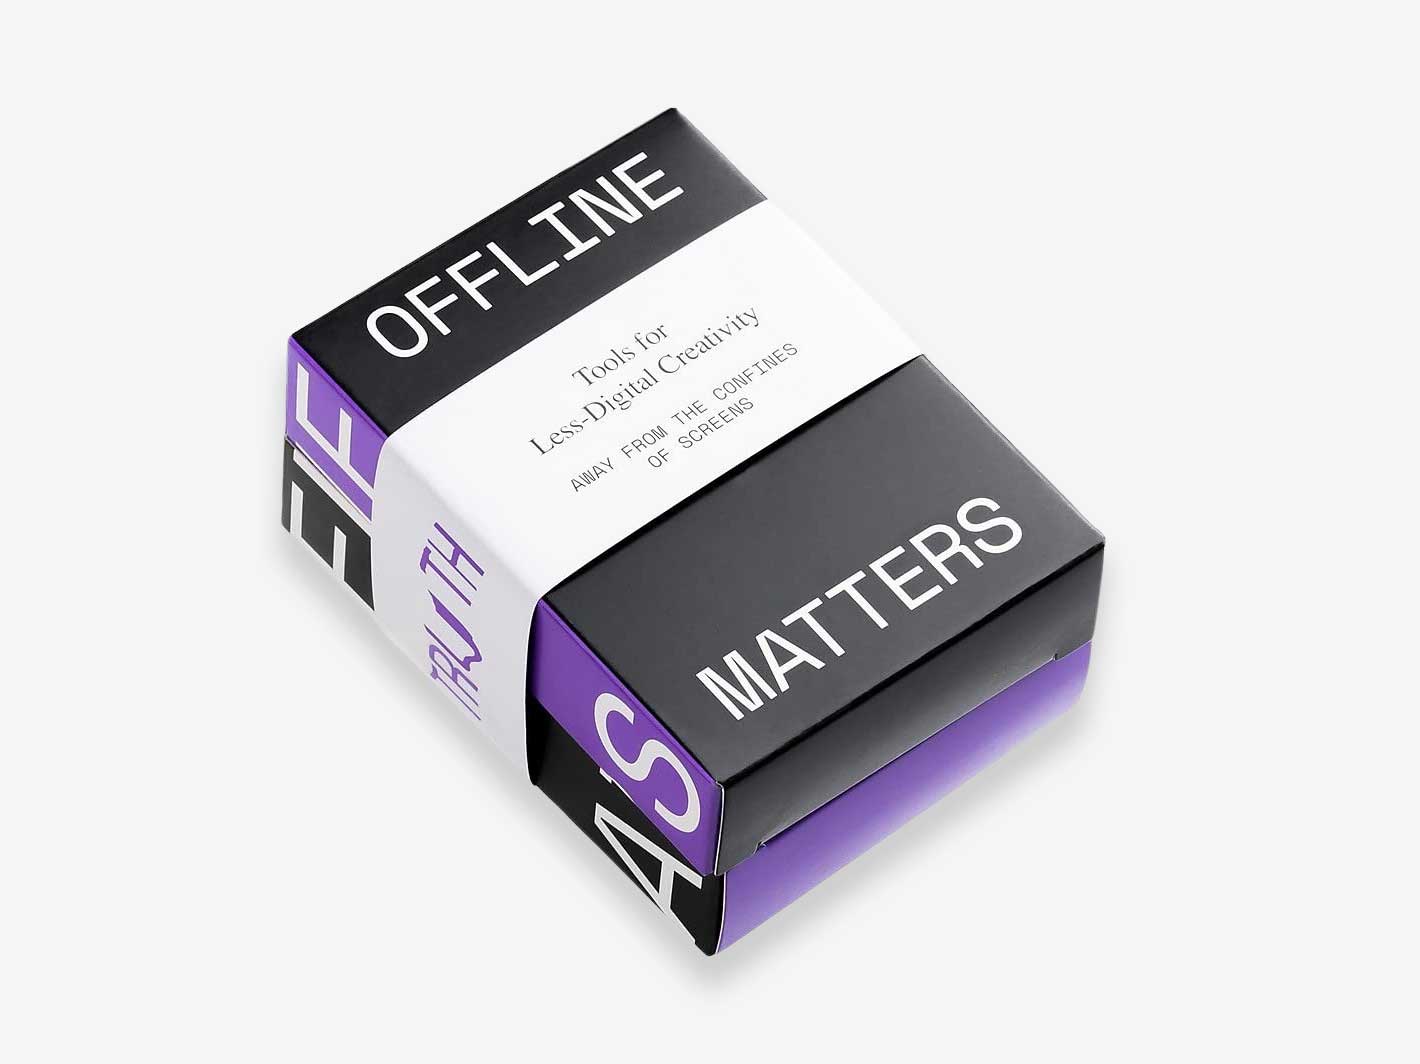 Offline Matters Cards